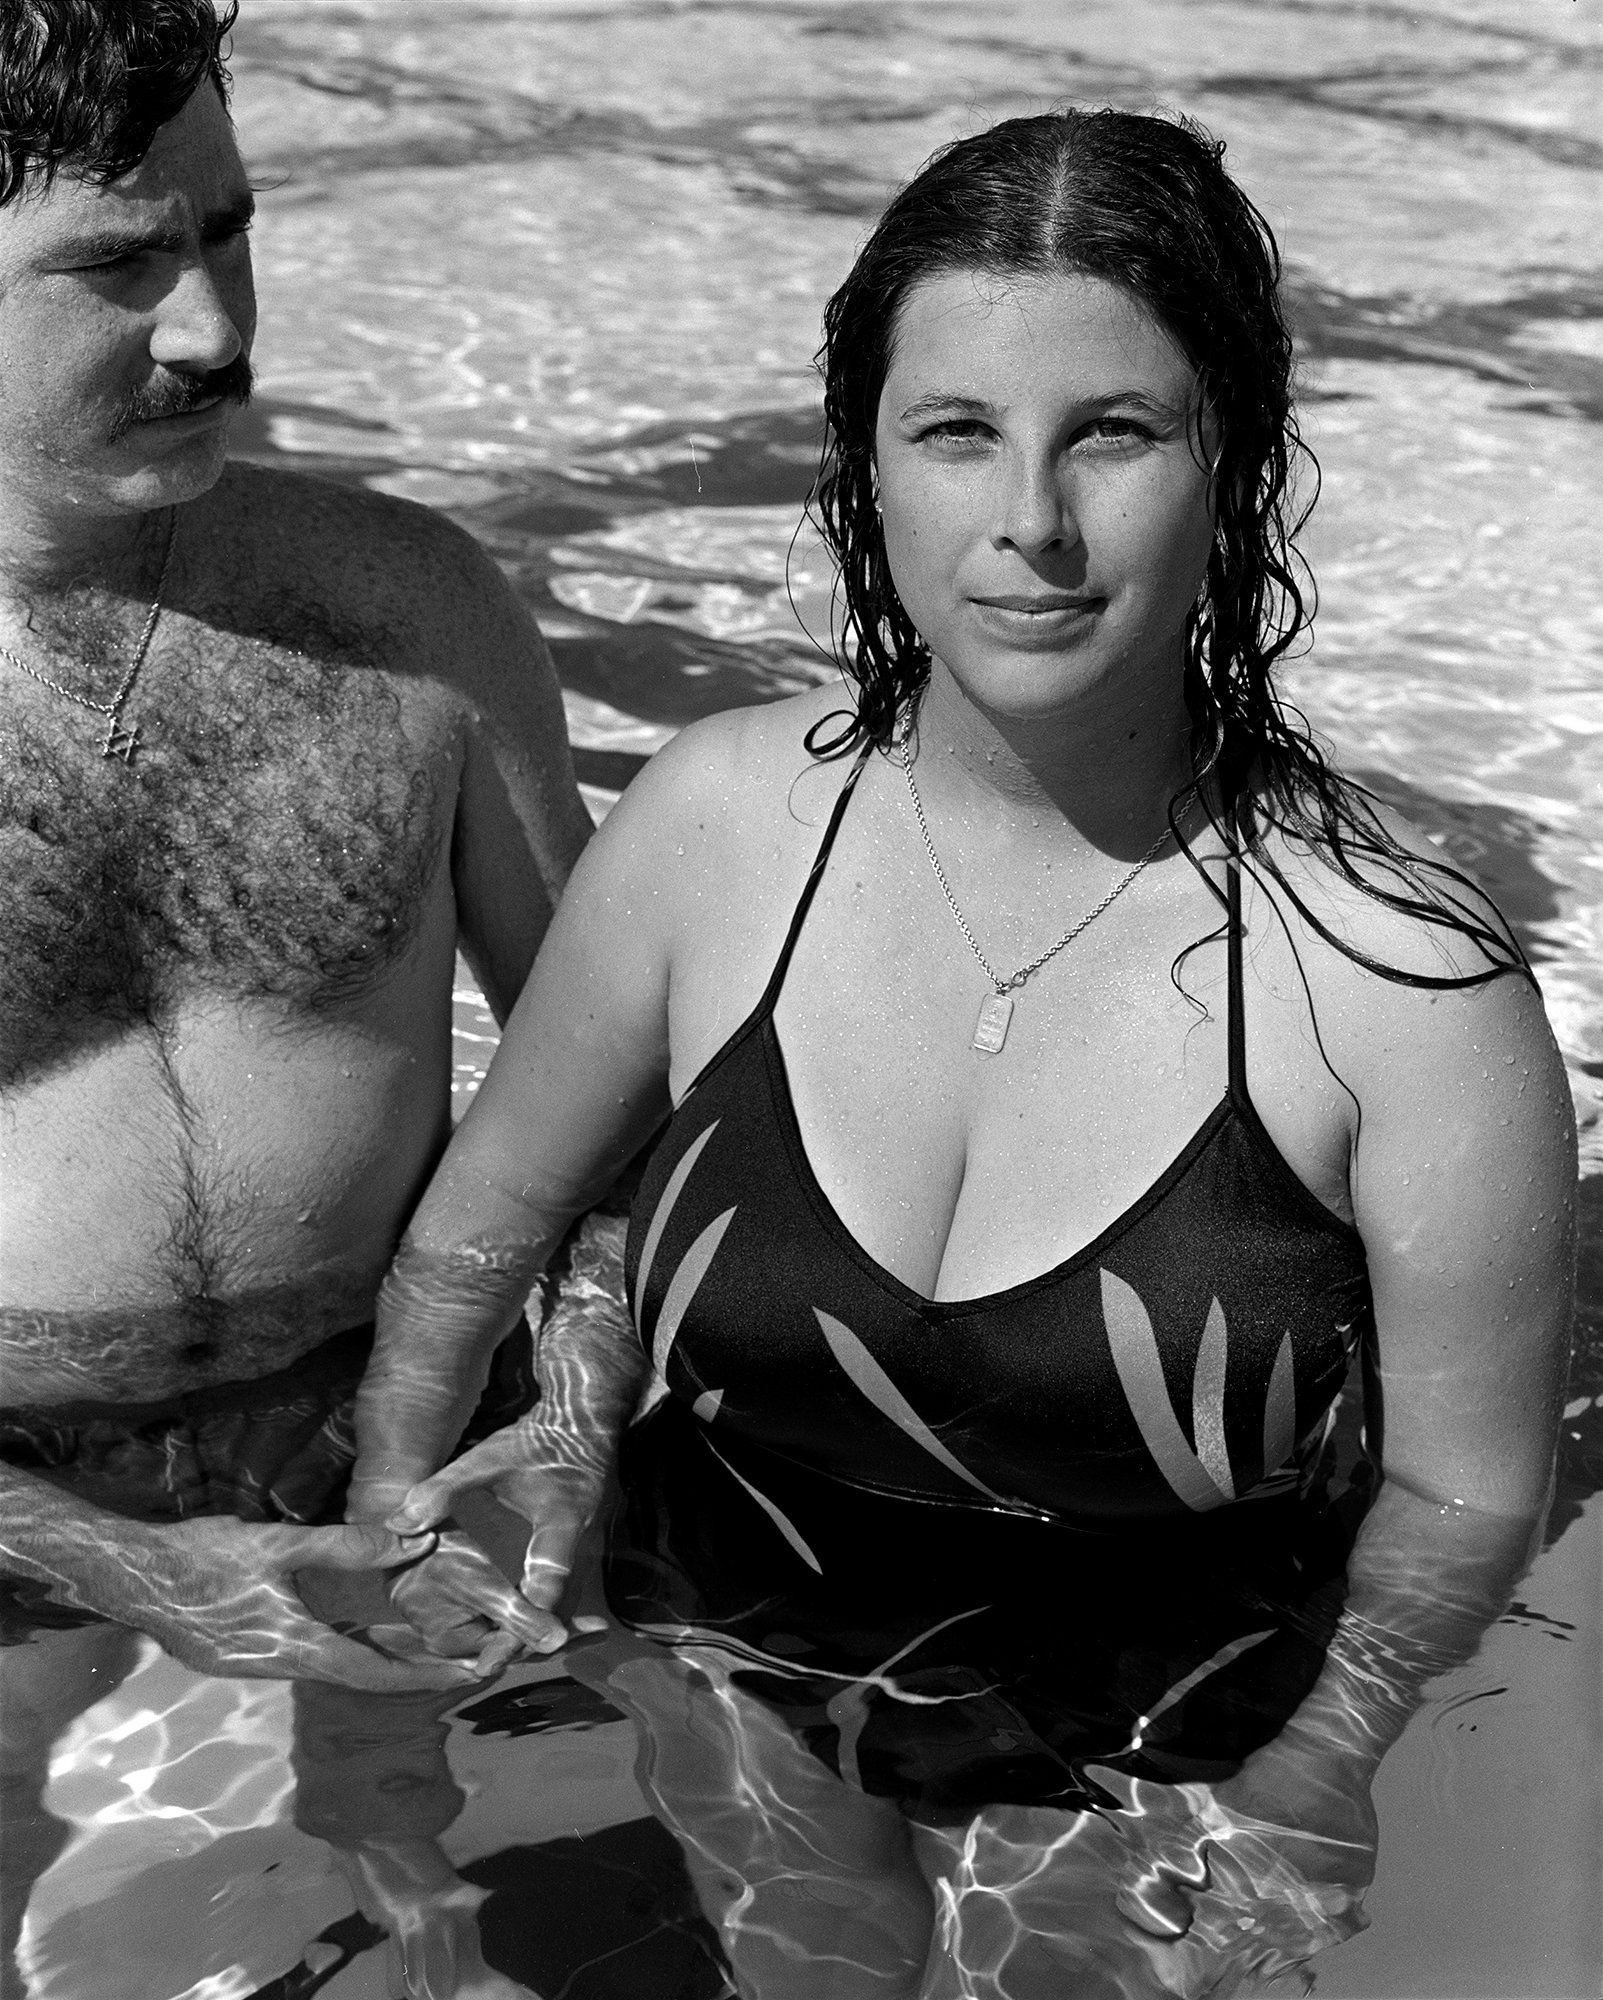   Woman with husband, JCC pool, 1981  